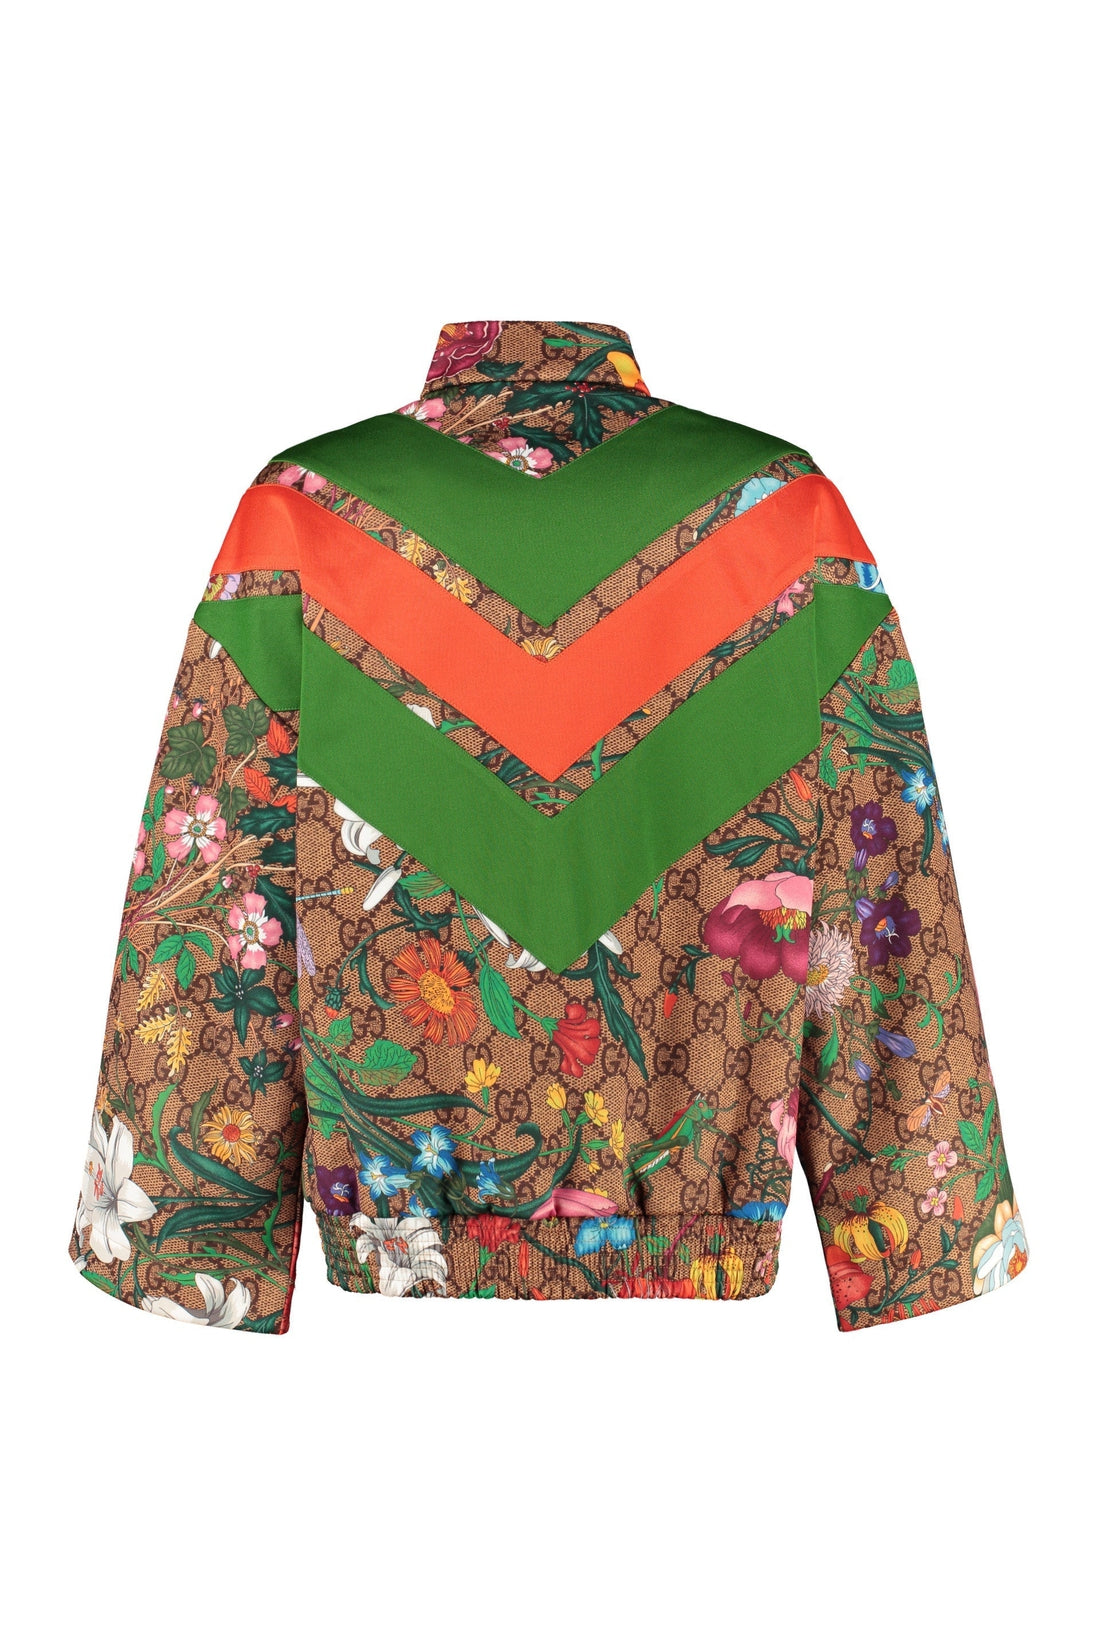 Gucci-OUTLET-SALE-Printed cotton zipped sweatshirt-ARCHIVIST